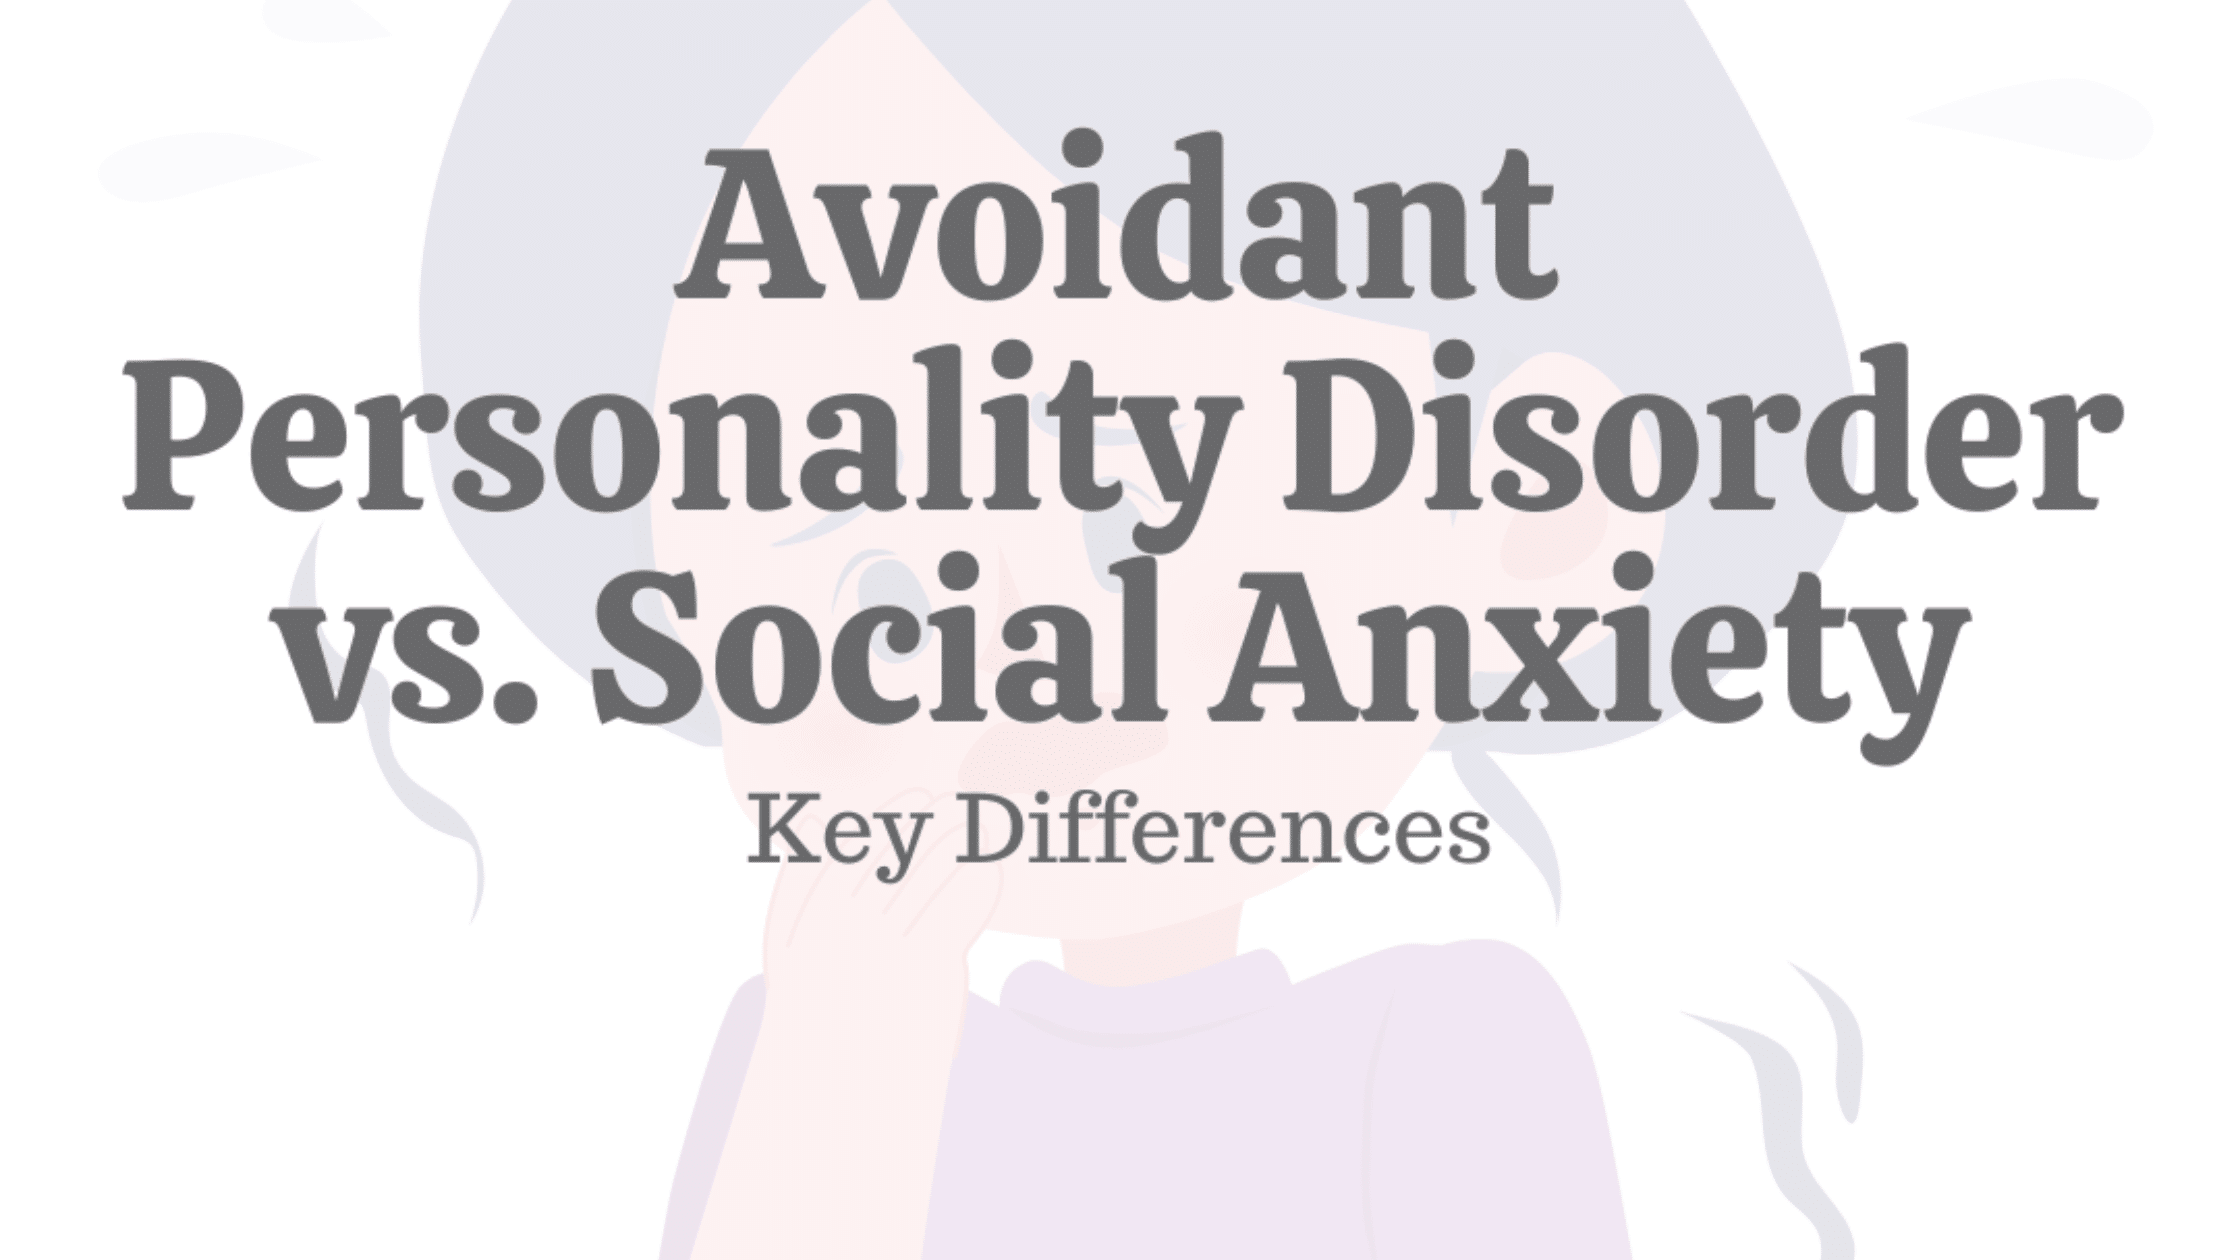 Avoidant Personality Disorder vs Social Anxiety Disorder